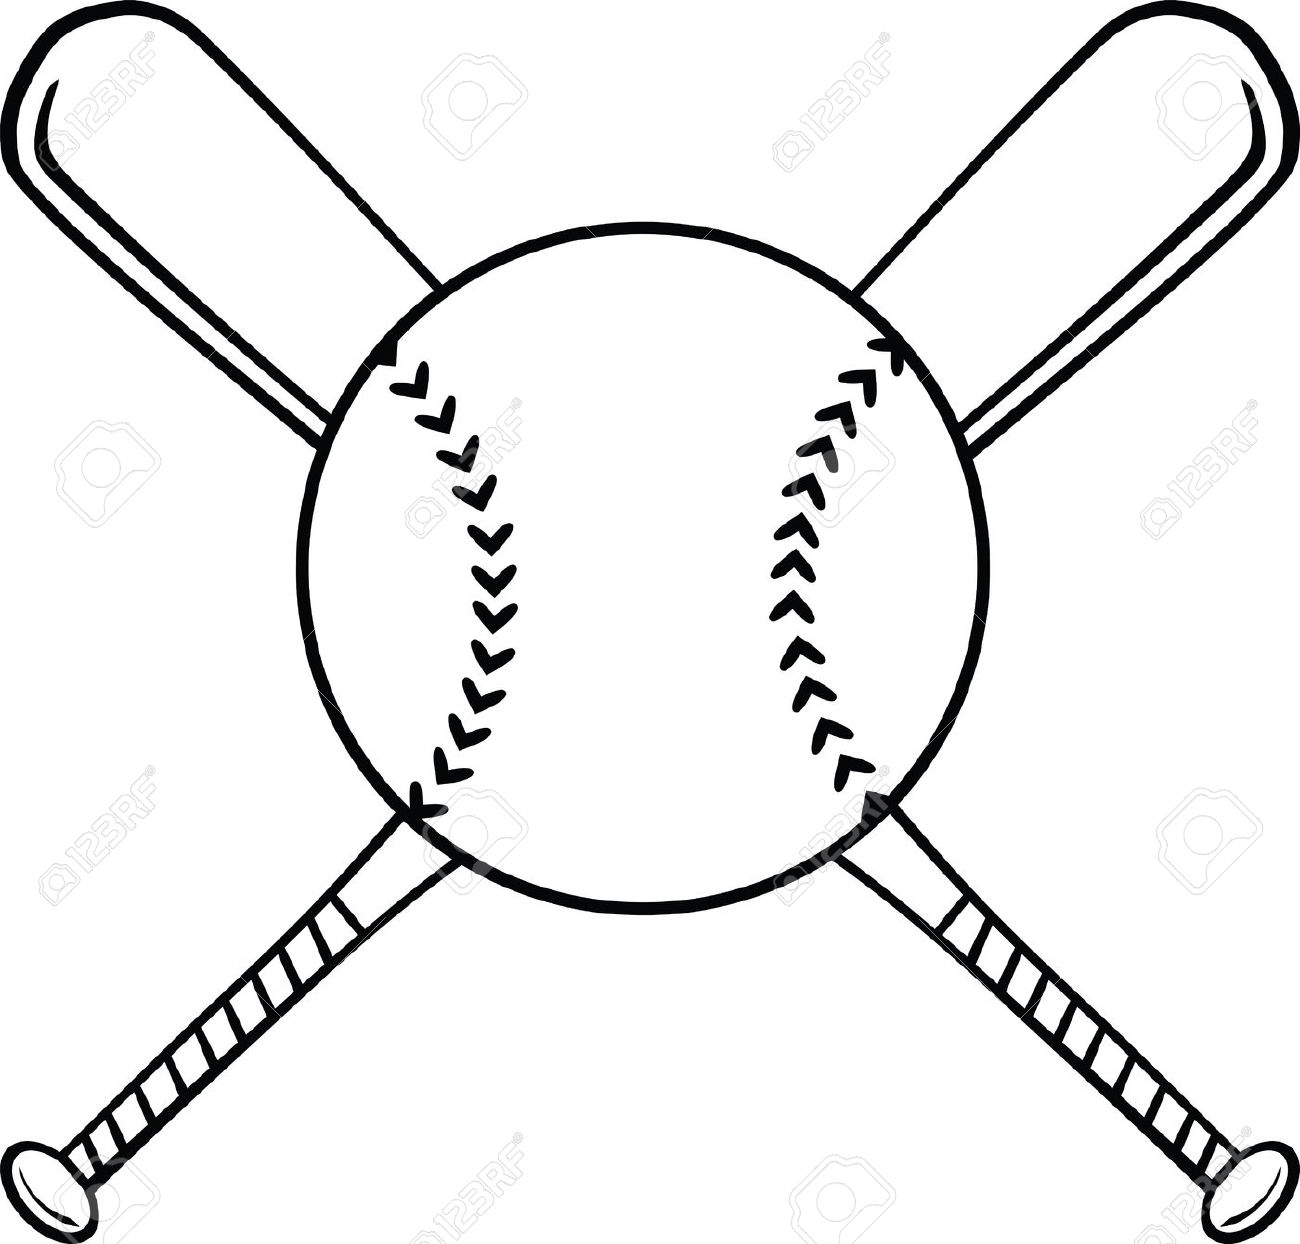 Black and white baseball clipart